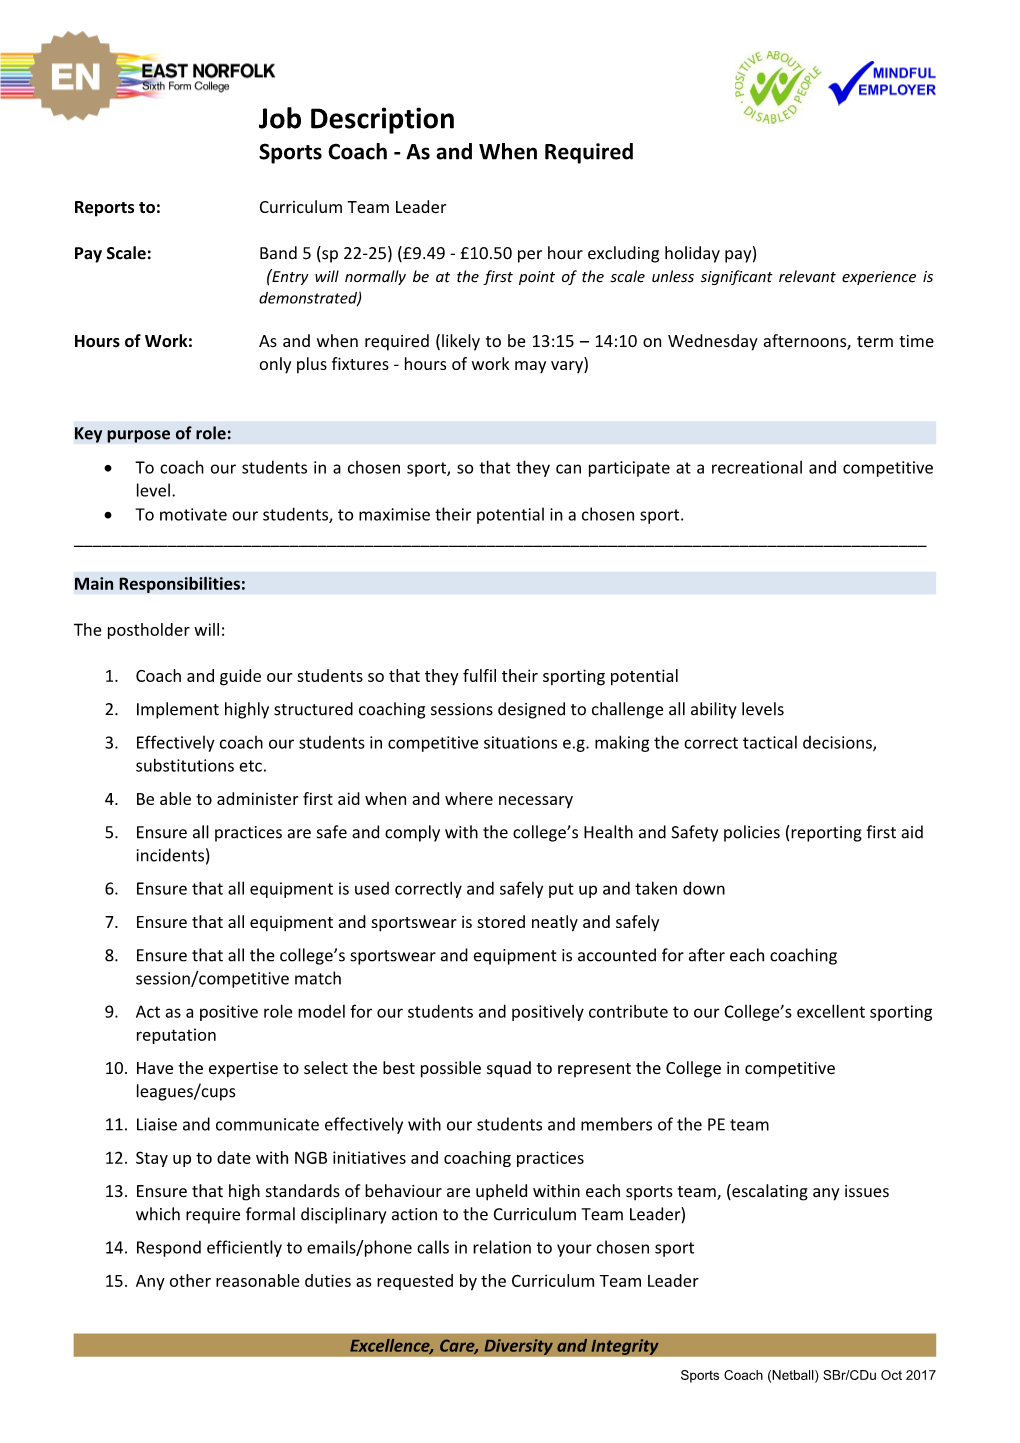 Job Specification : College Assistant Caretaker s1